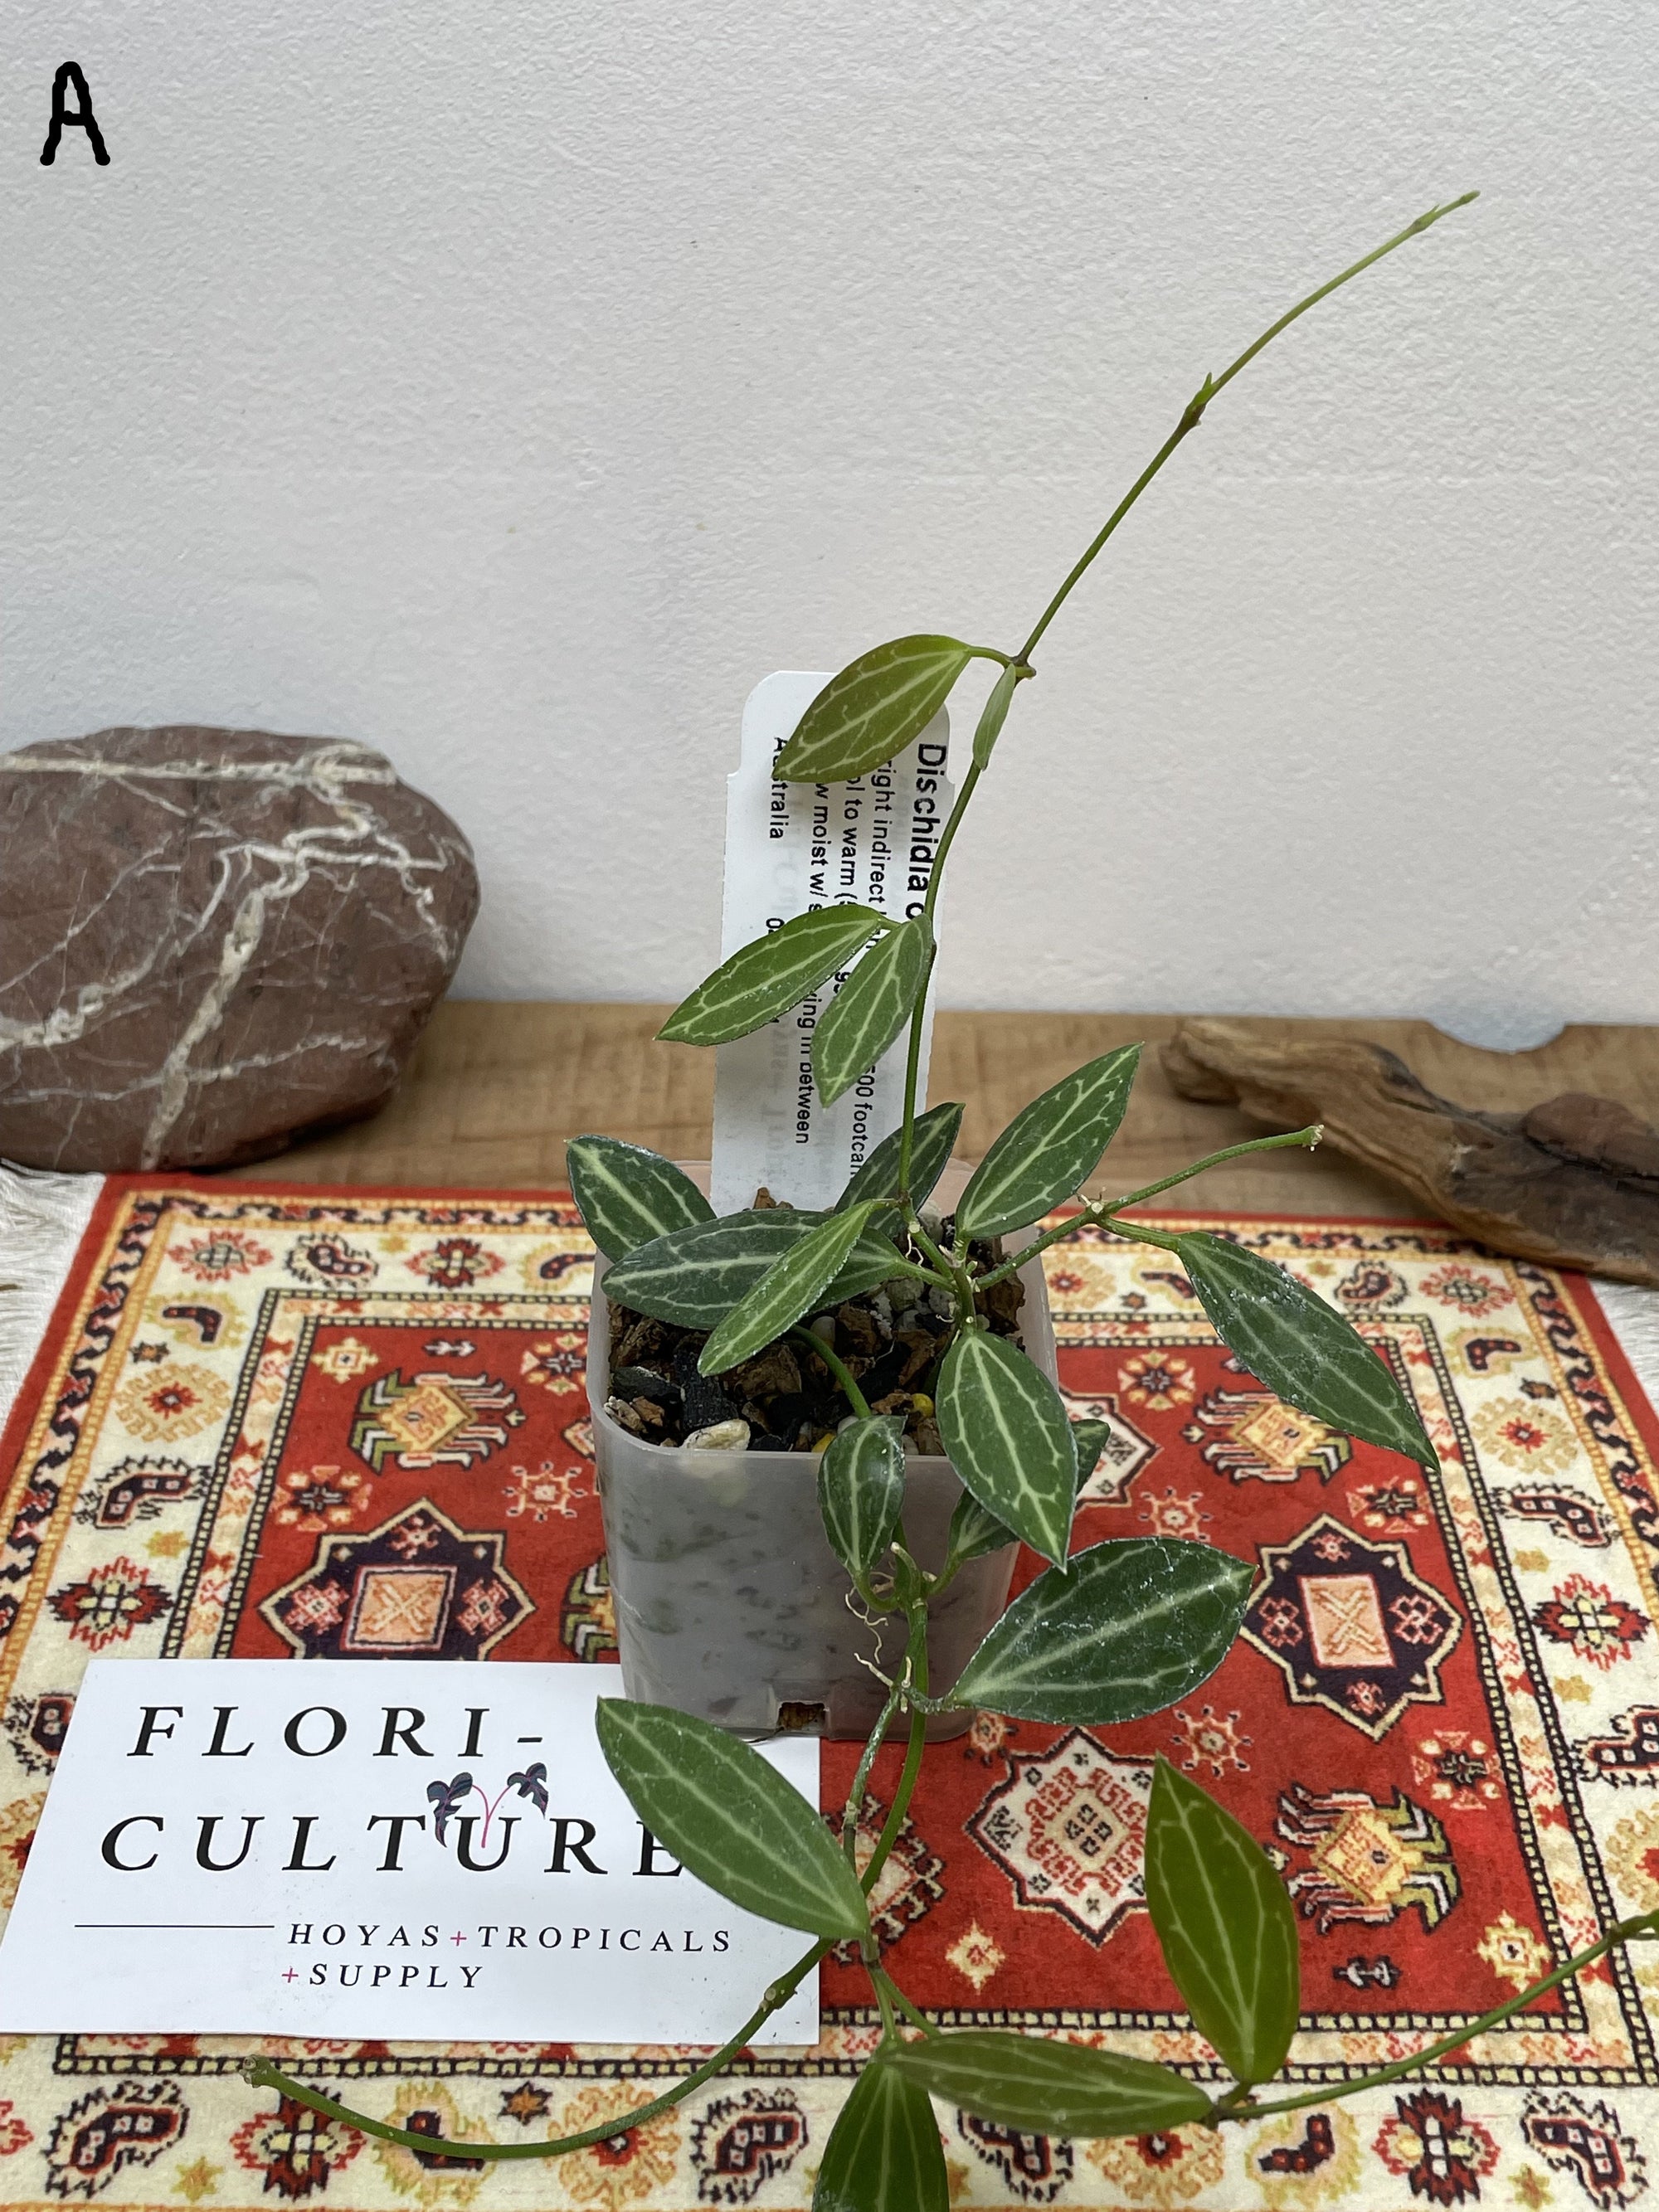 Octagonal Plastic Baskets - Flori-Culture Tropical Nursery + Hoya + Supply